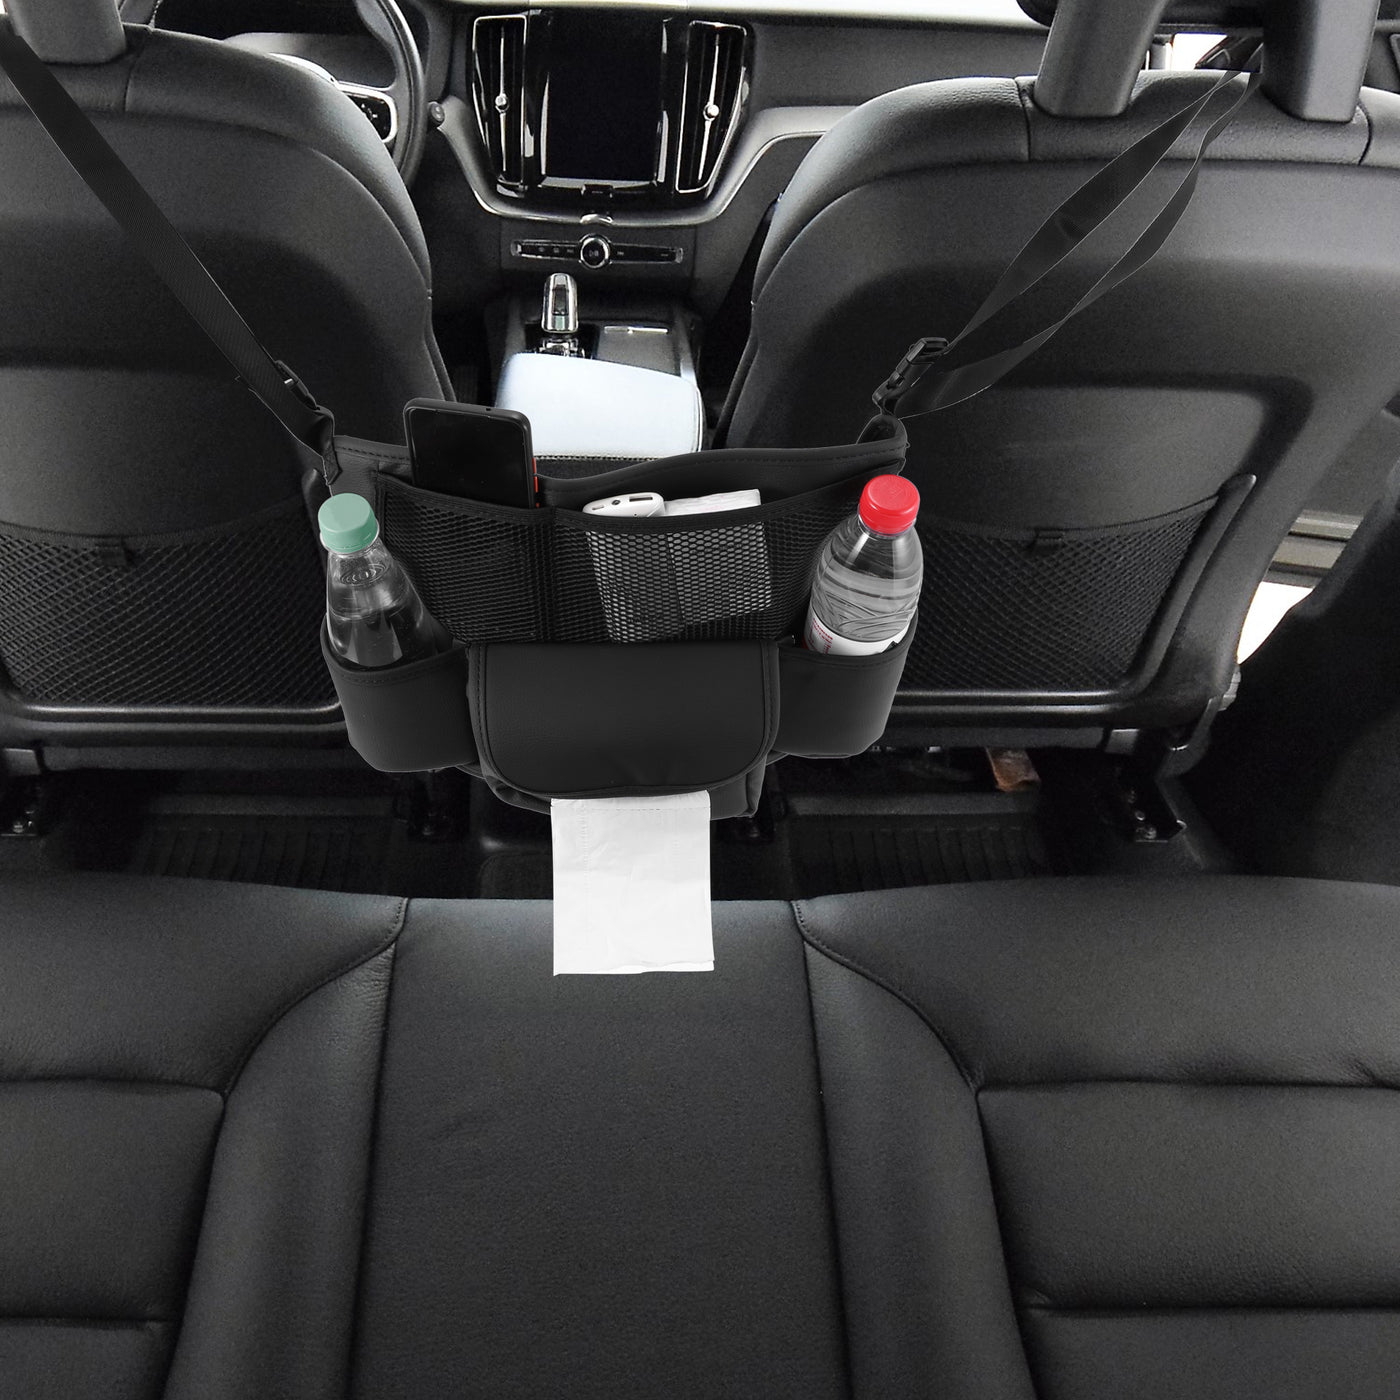 X AUTOHAUX Car Large Capacity Seat Organizer Backseat Multi Pockets Purse Storage Universal Fit for Car Truck SUV 37x25cm